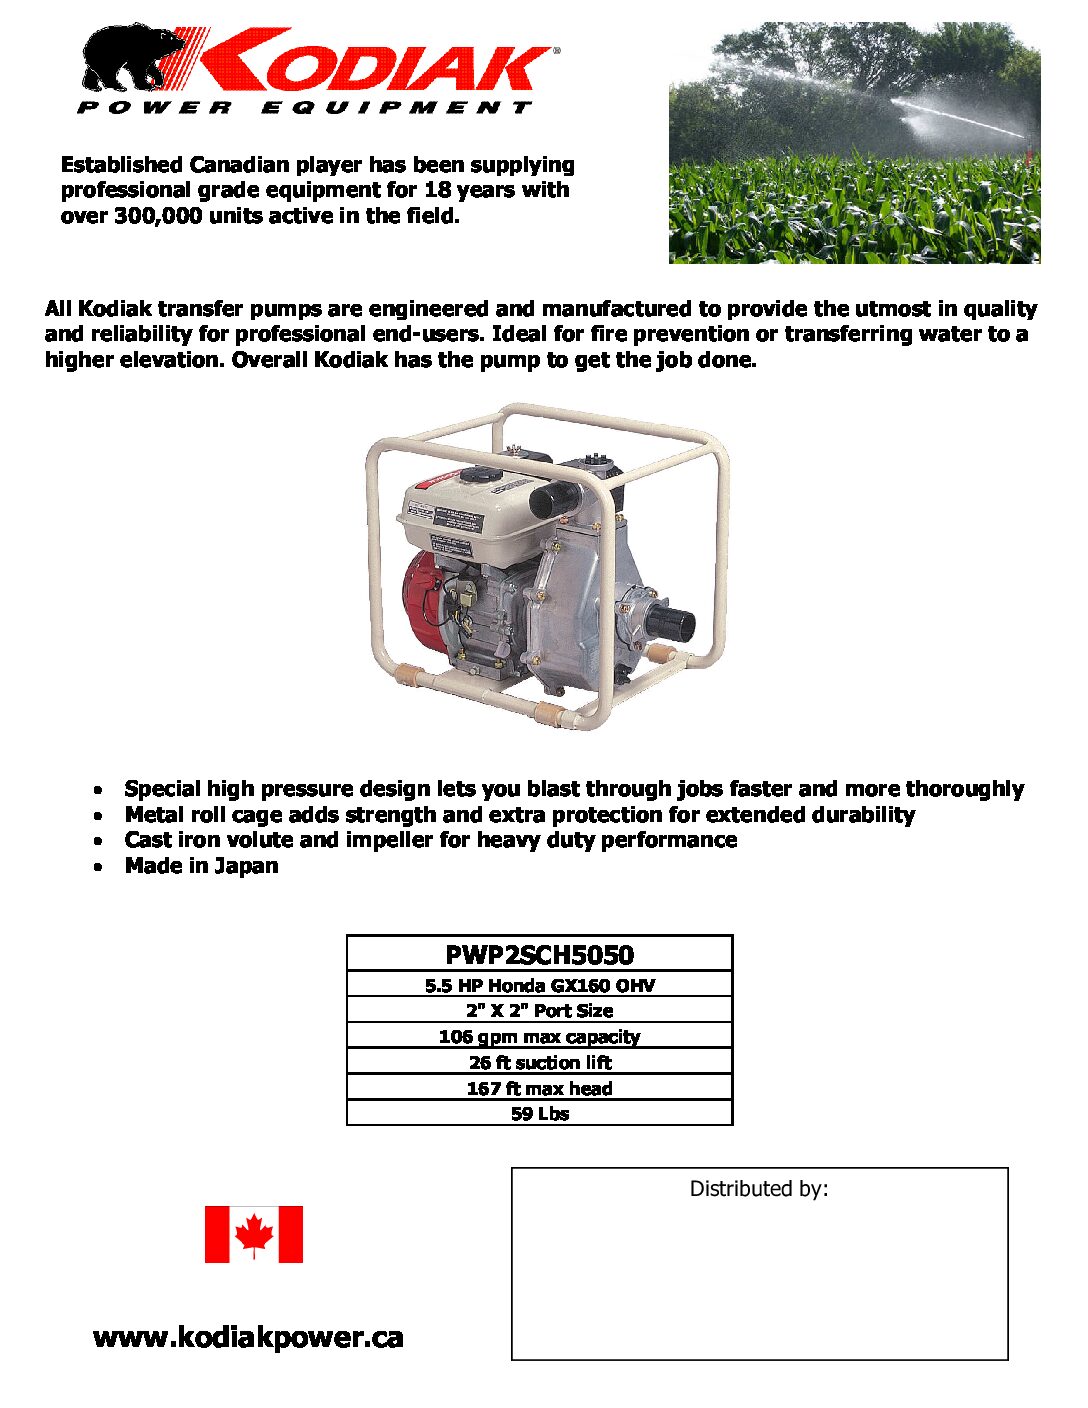 Kodiak PWP2SCH5050 Water Pumps Product Sheet